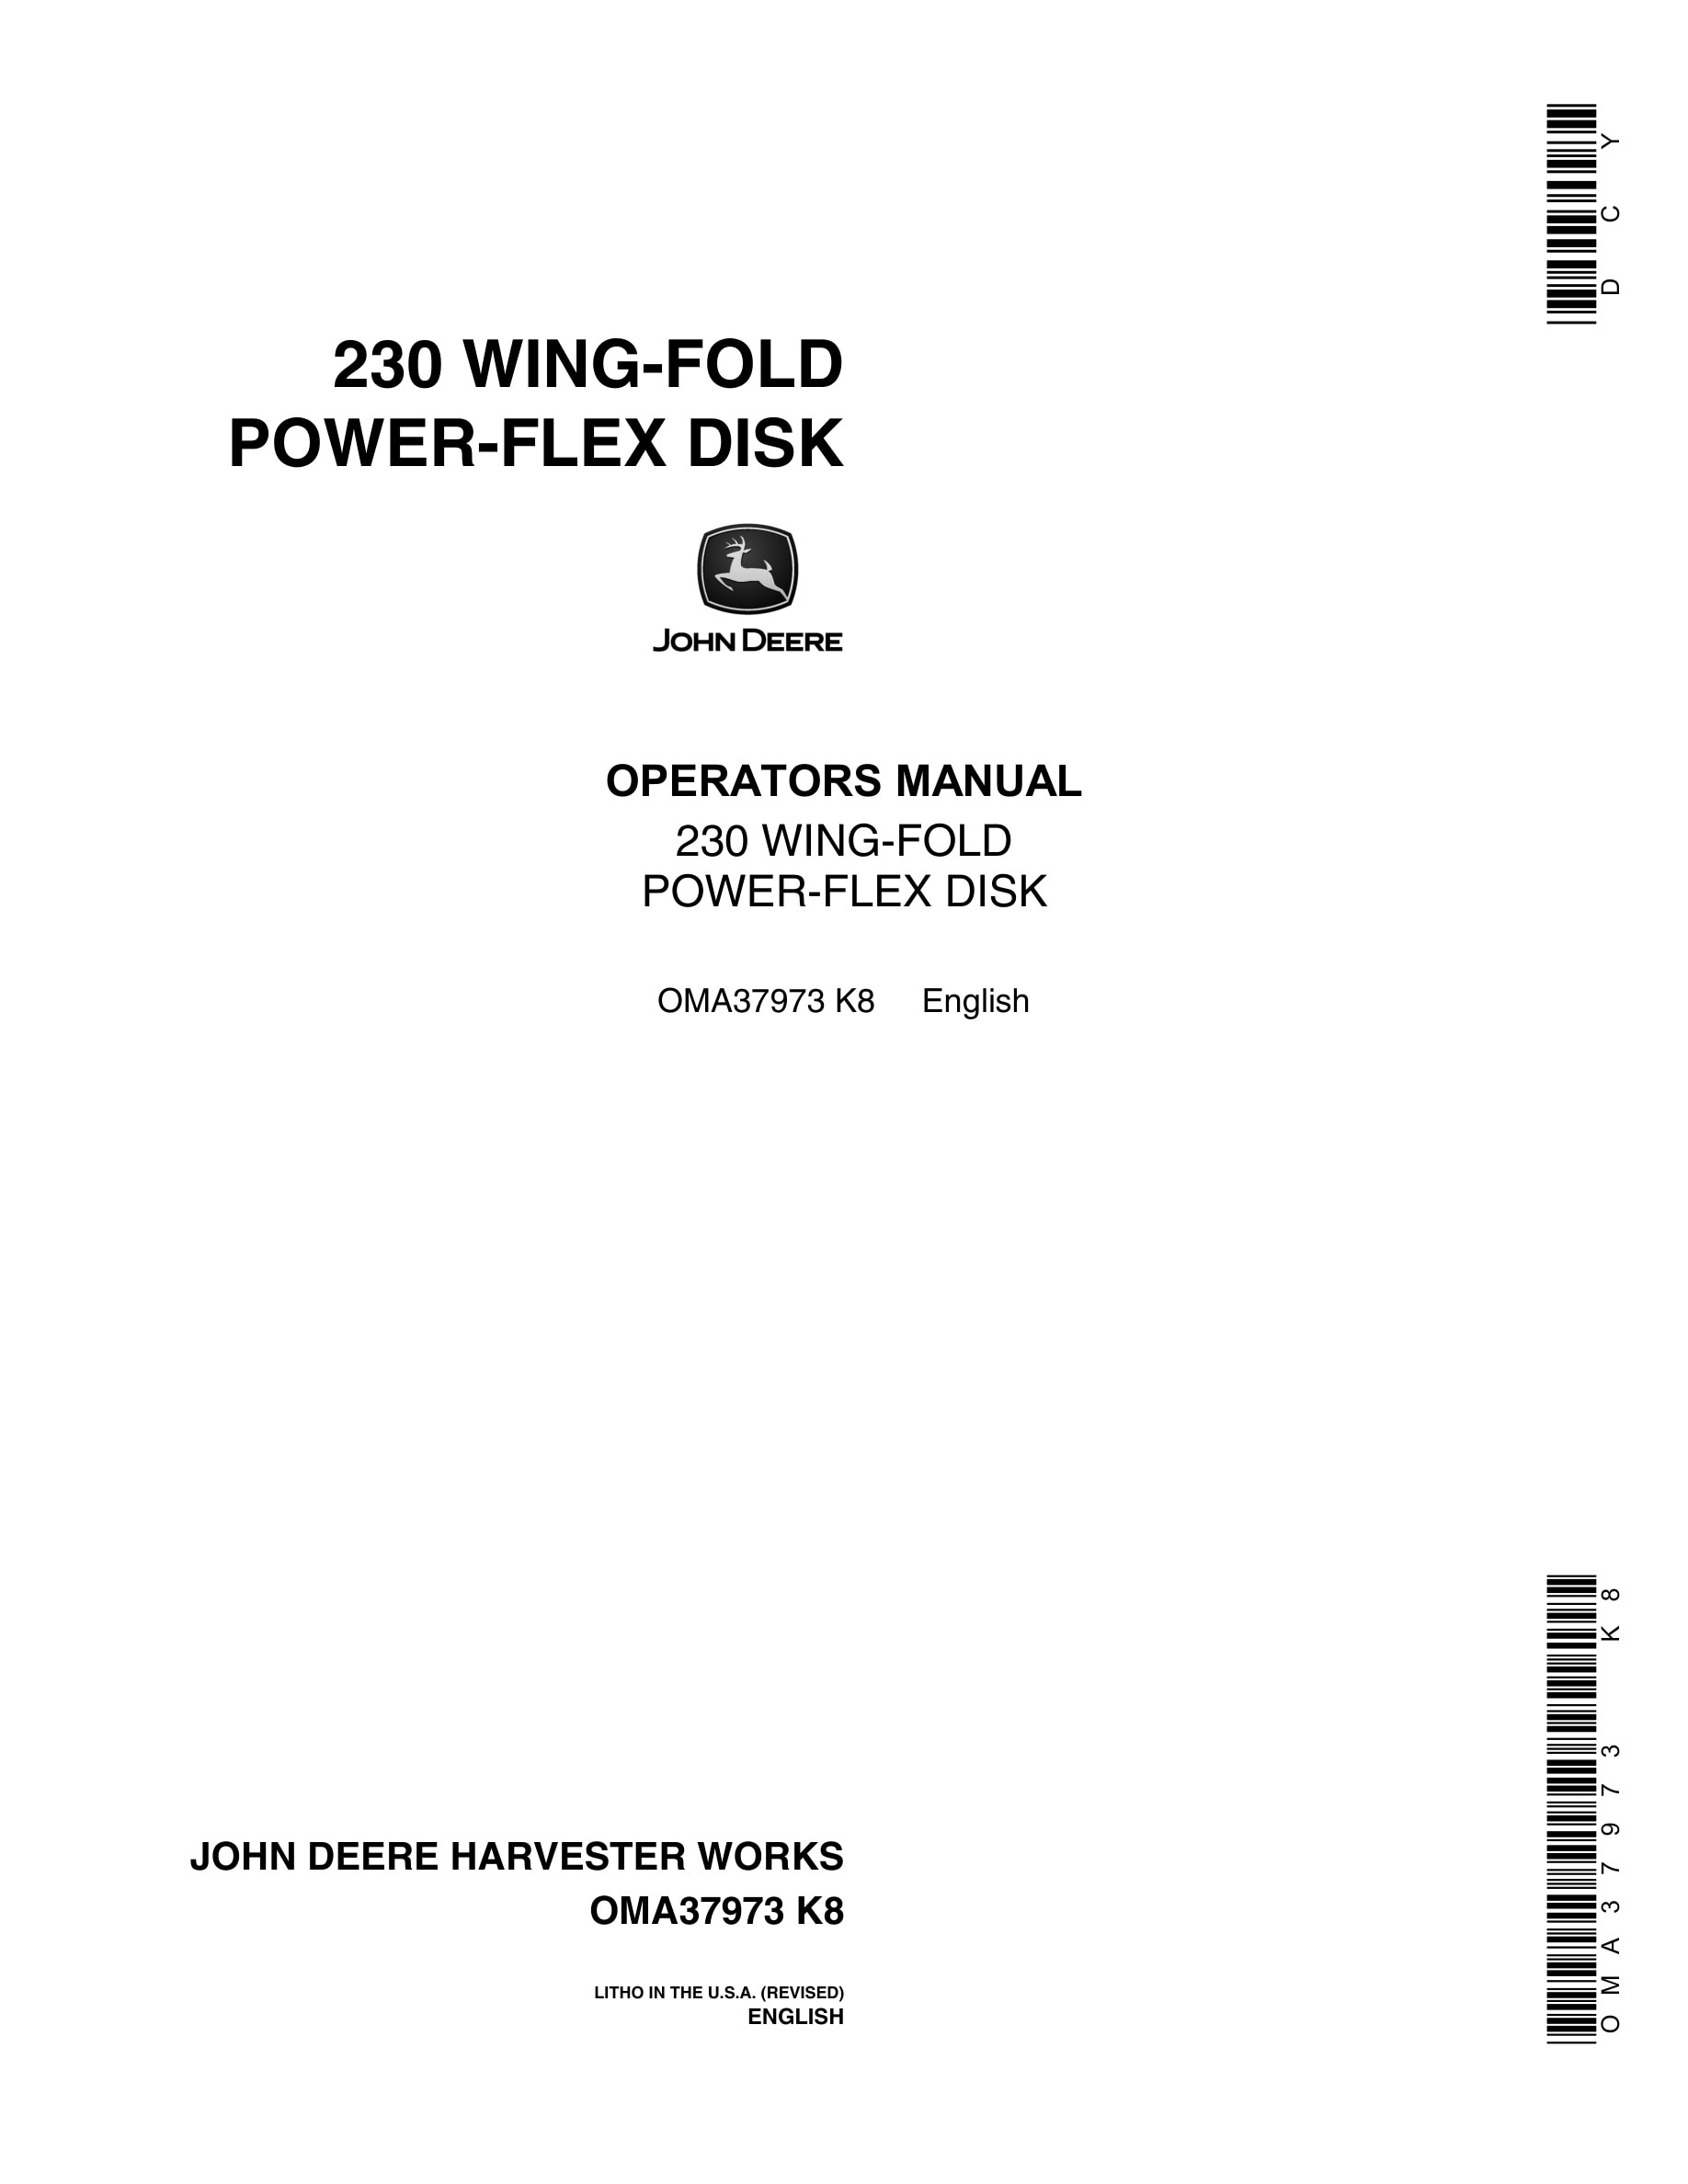 John Deere 230 WING-FOLD POWER-FLEX DISK Operator Manual OMA37973-1